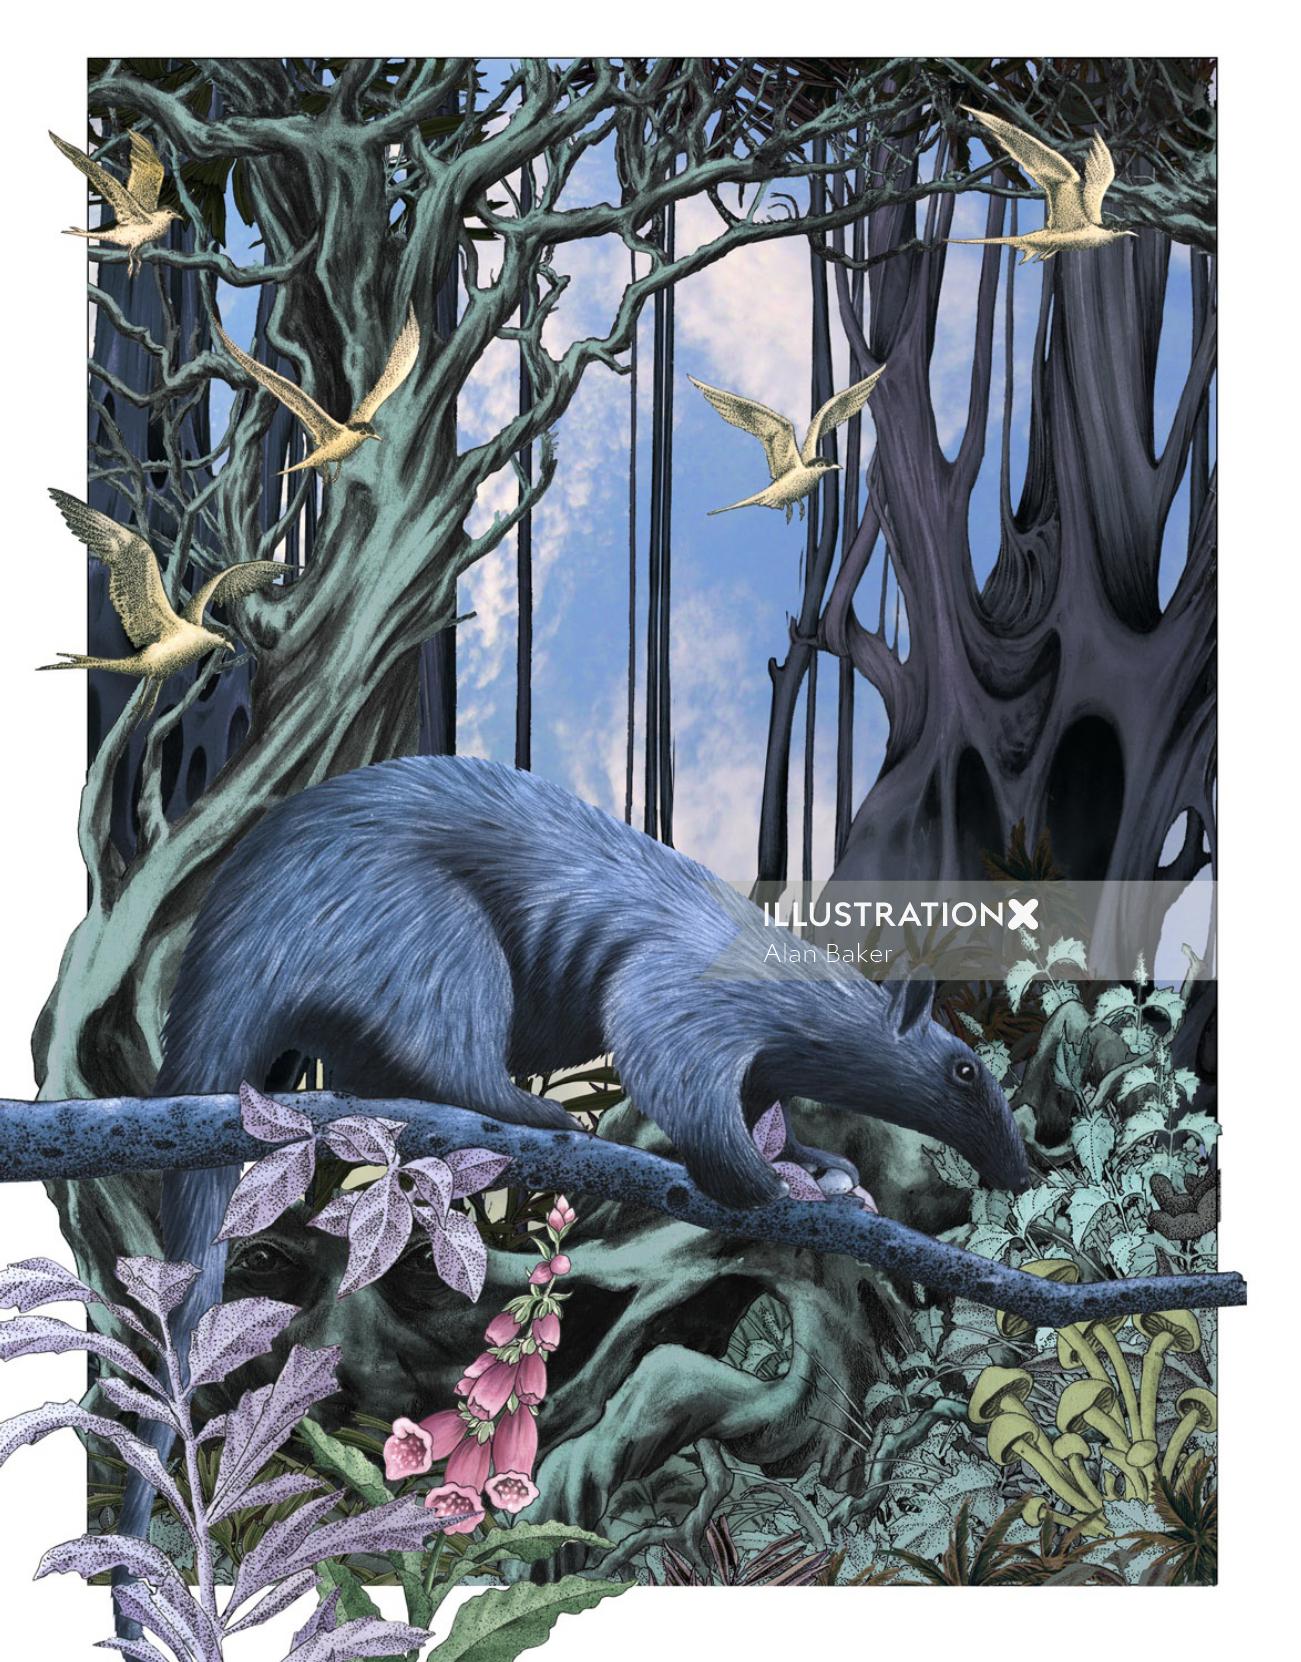 Wildlife fantasy - An illustration by Alan Baker